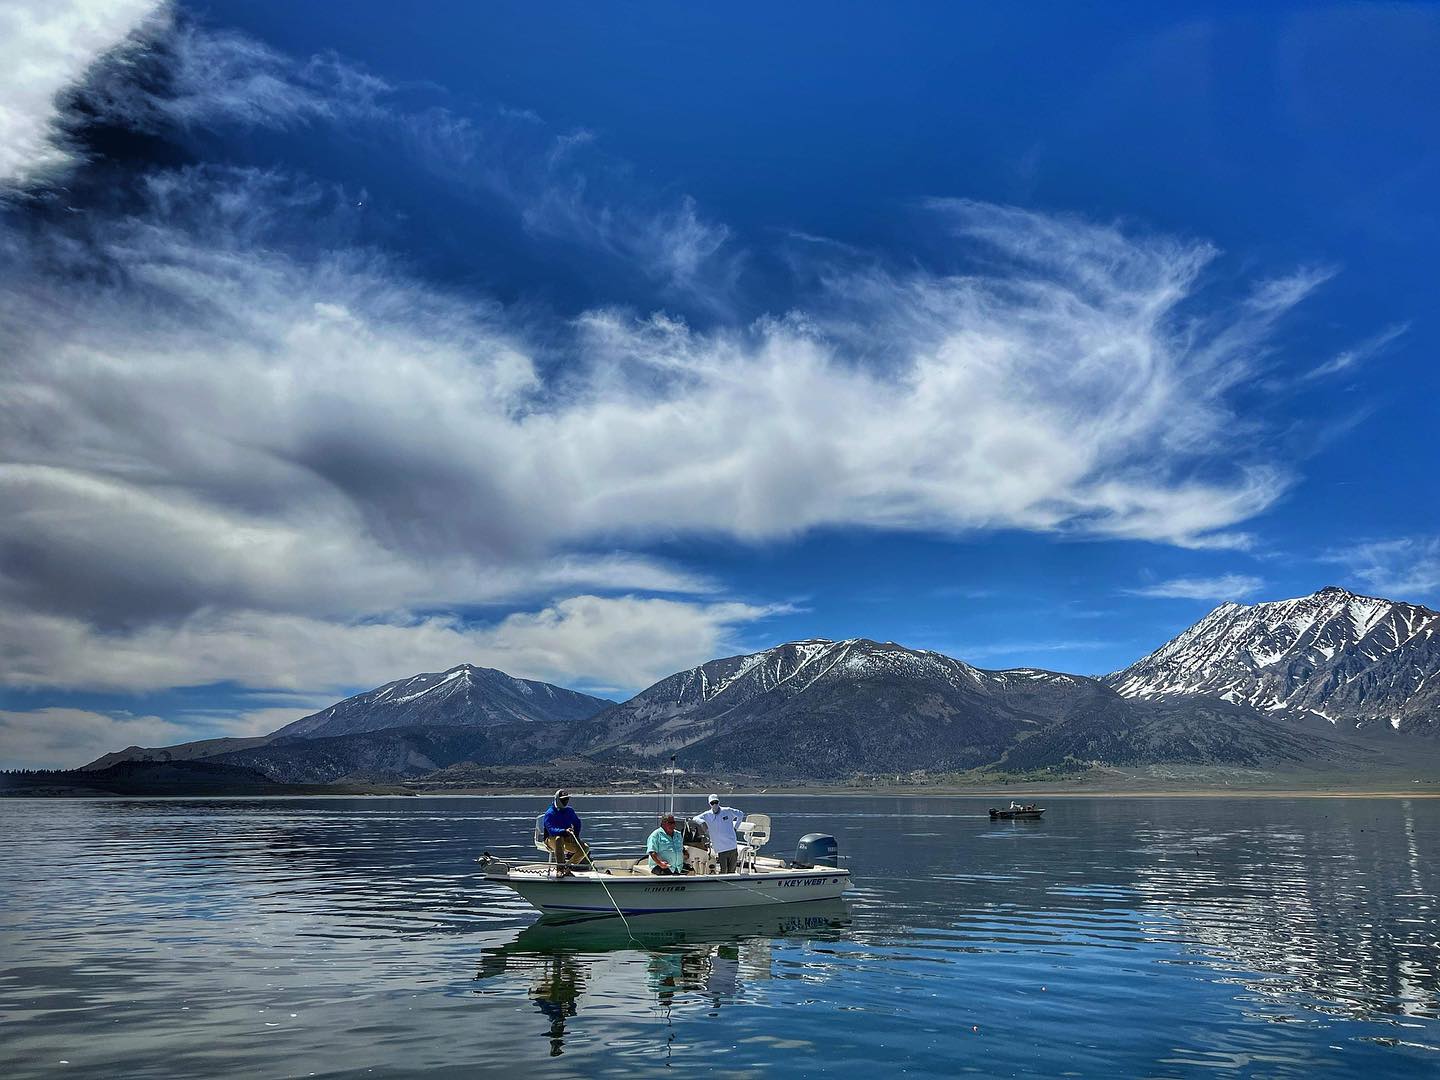 Crowley Lake Fish Report - Mammoth Lakes, CA (Mono County)